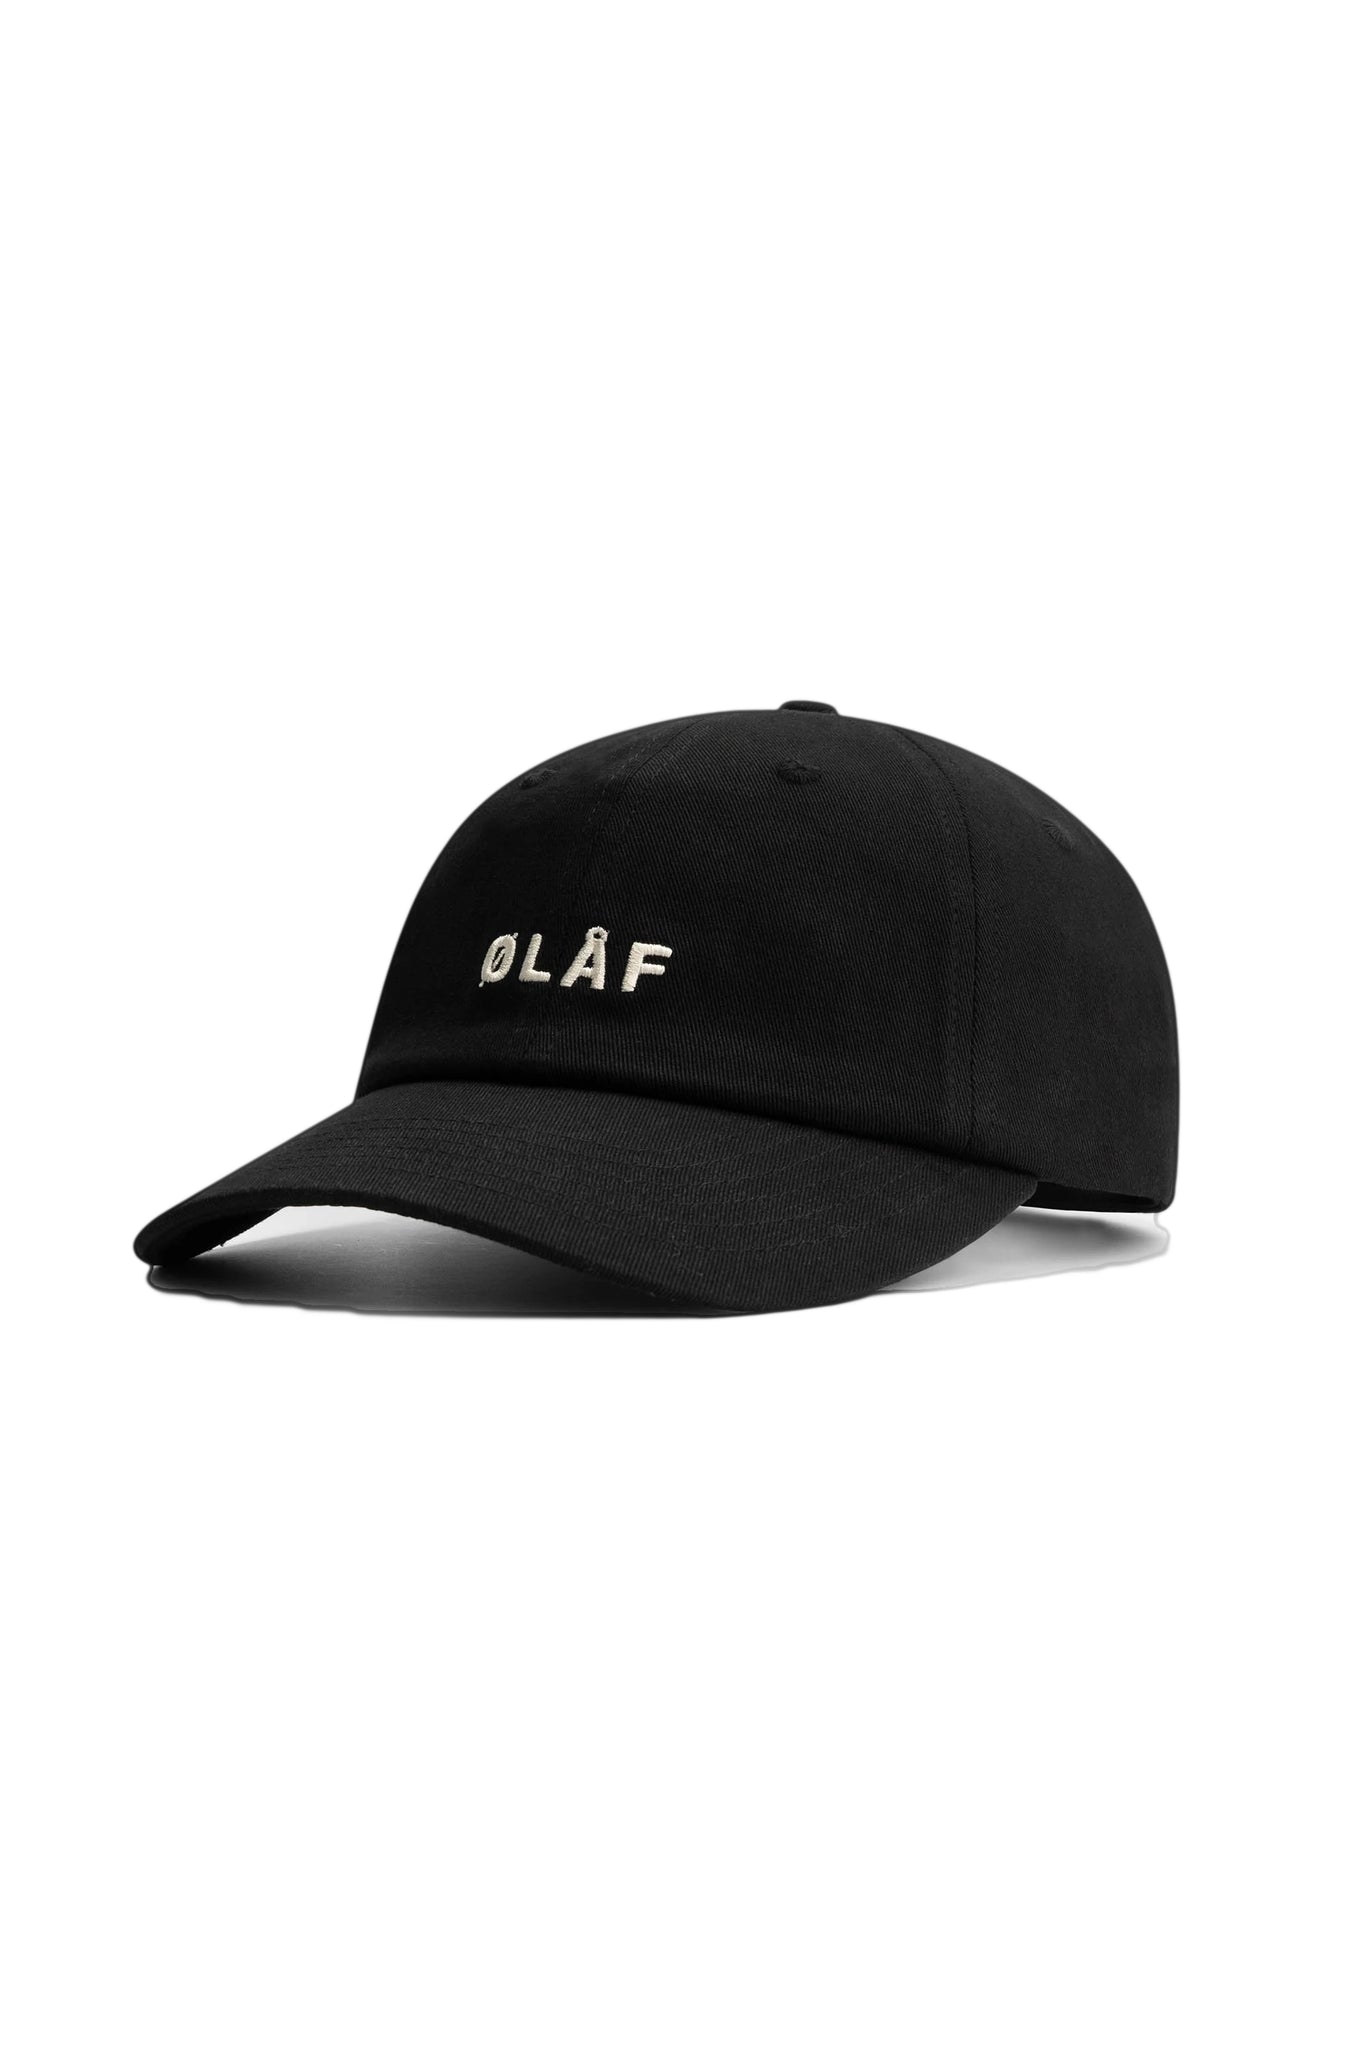 Olaf Block Cap, black